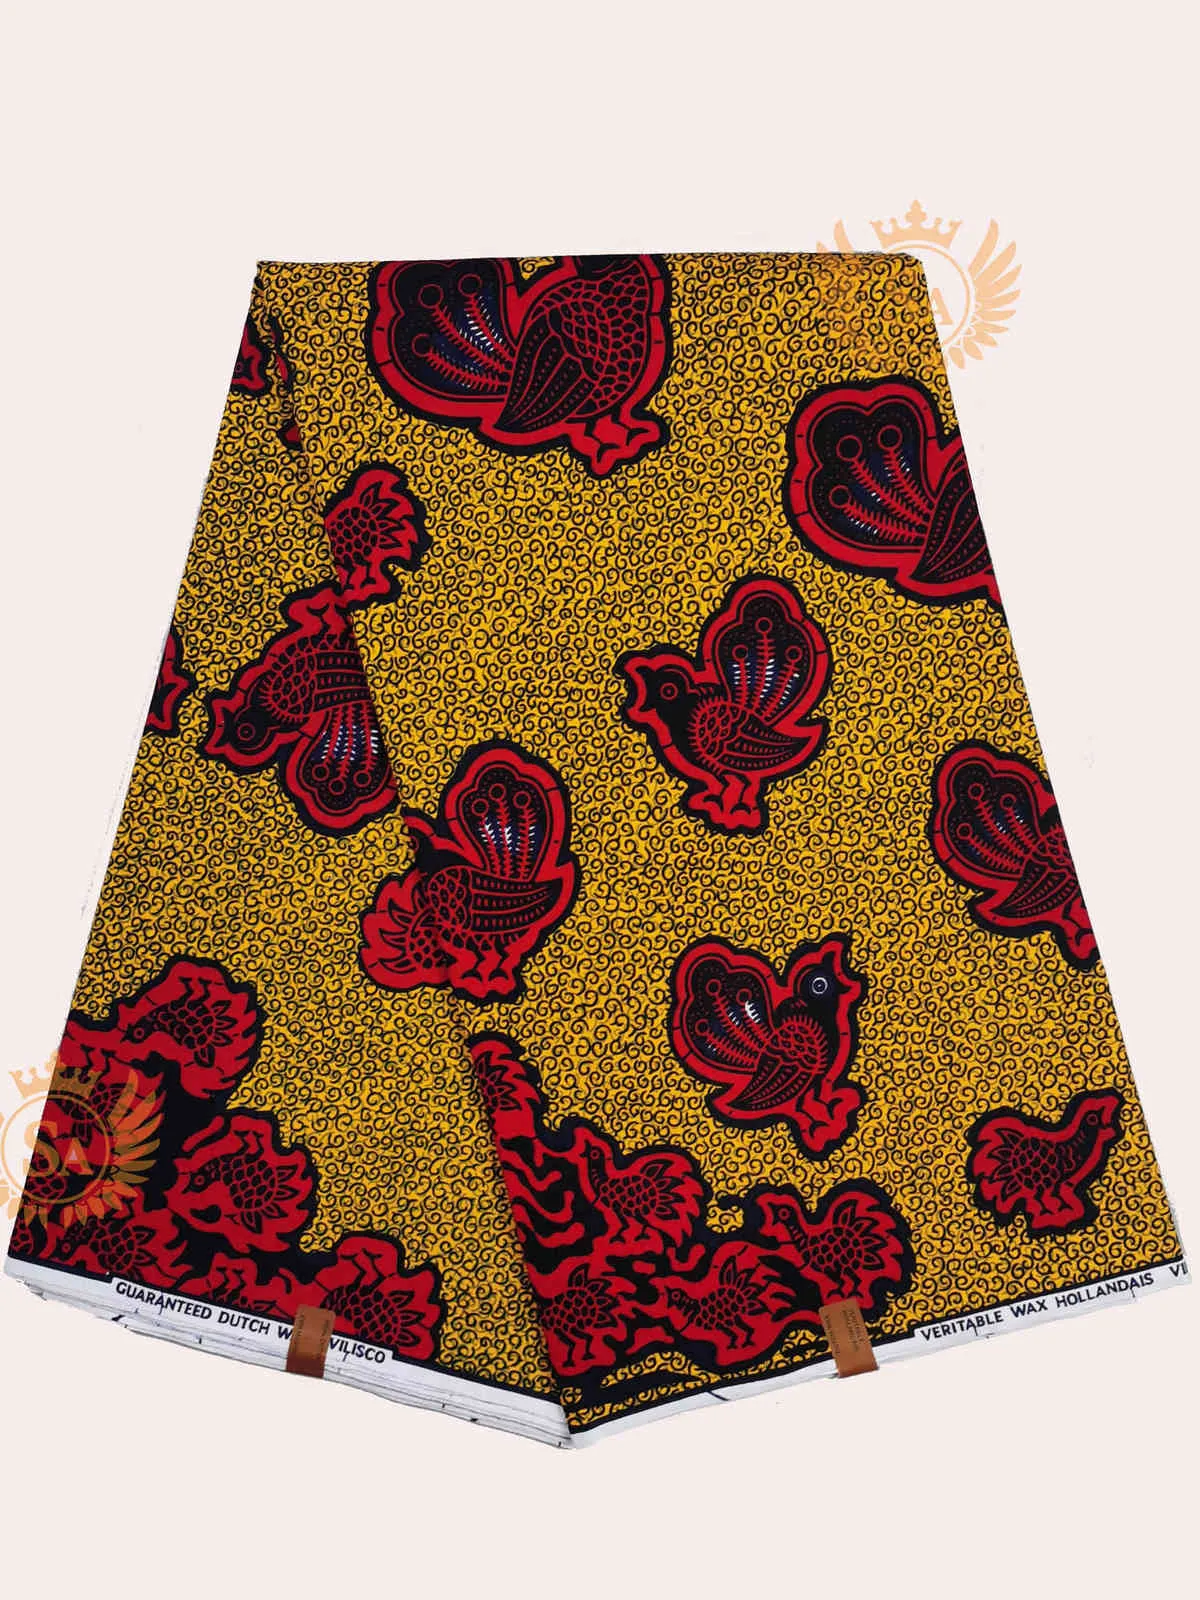 Veritable Wax d Real wax print fabric dutch hollandais pagne africa Dress Cotton 02 210702279e